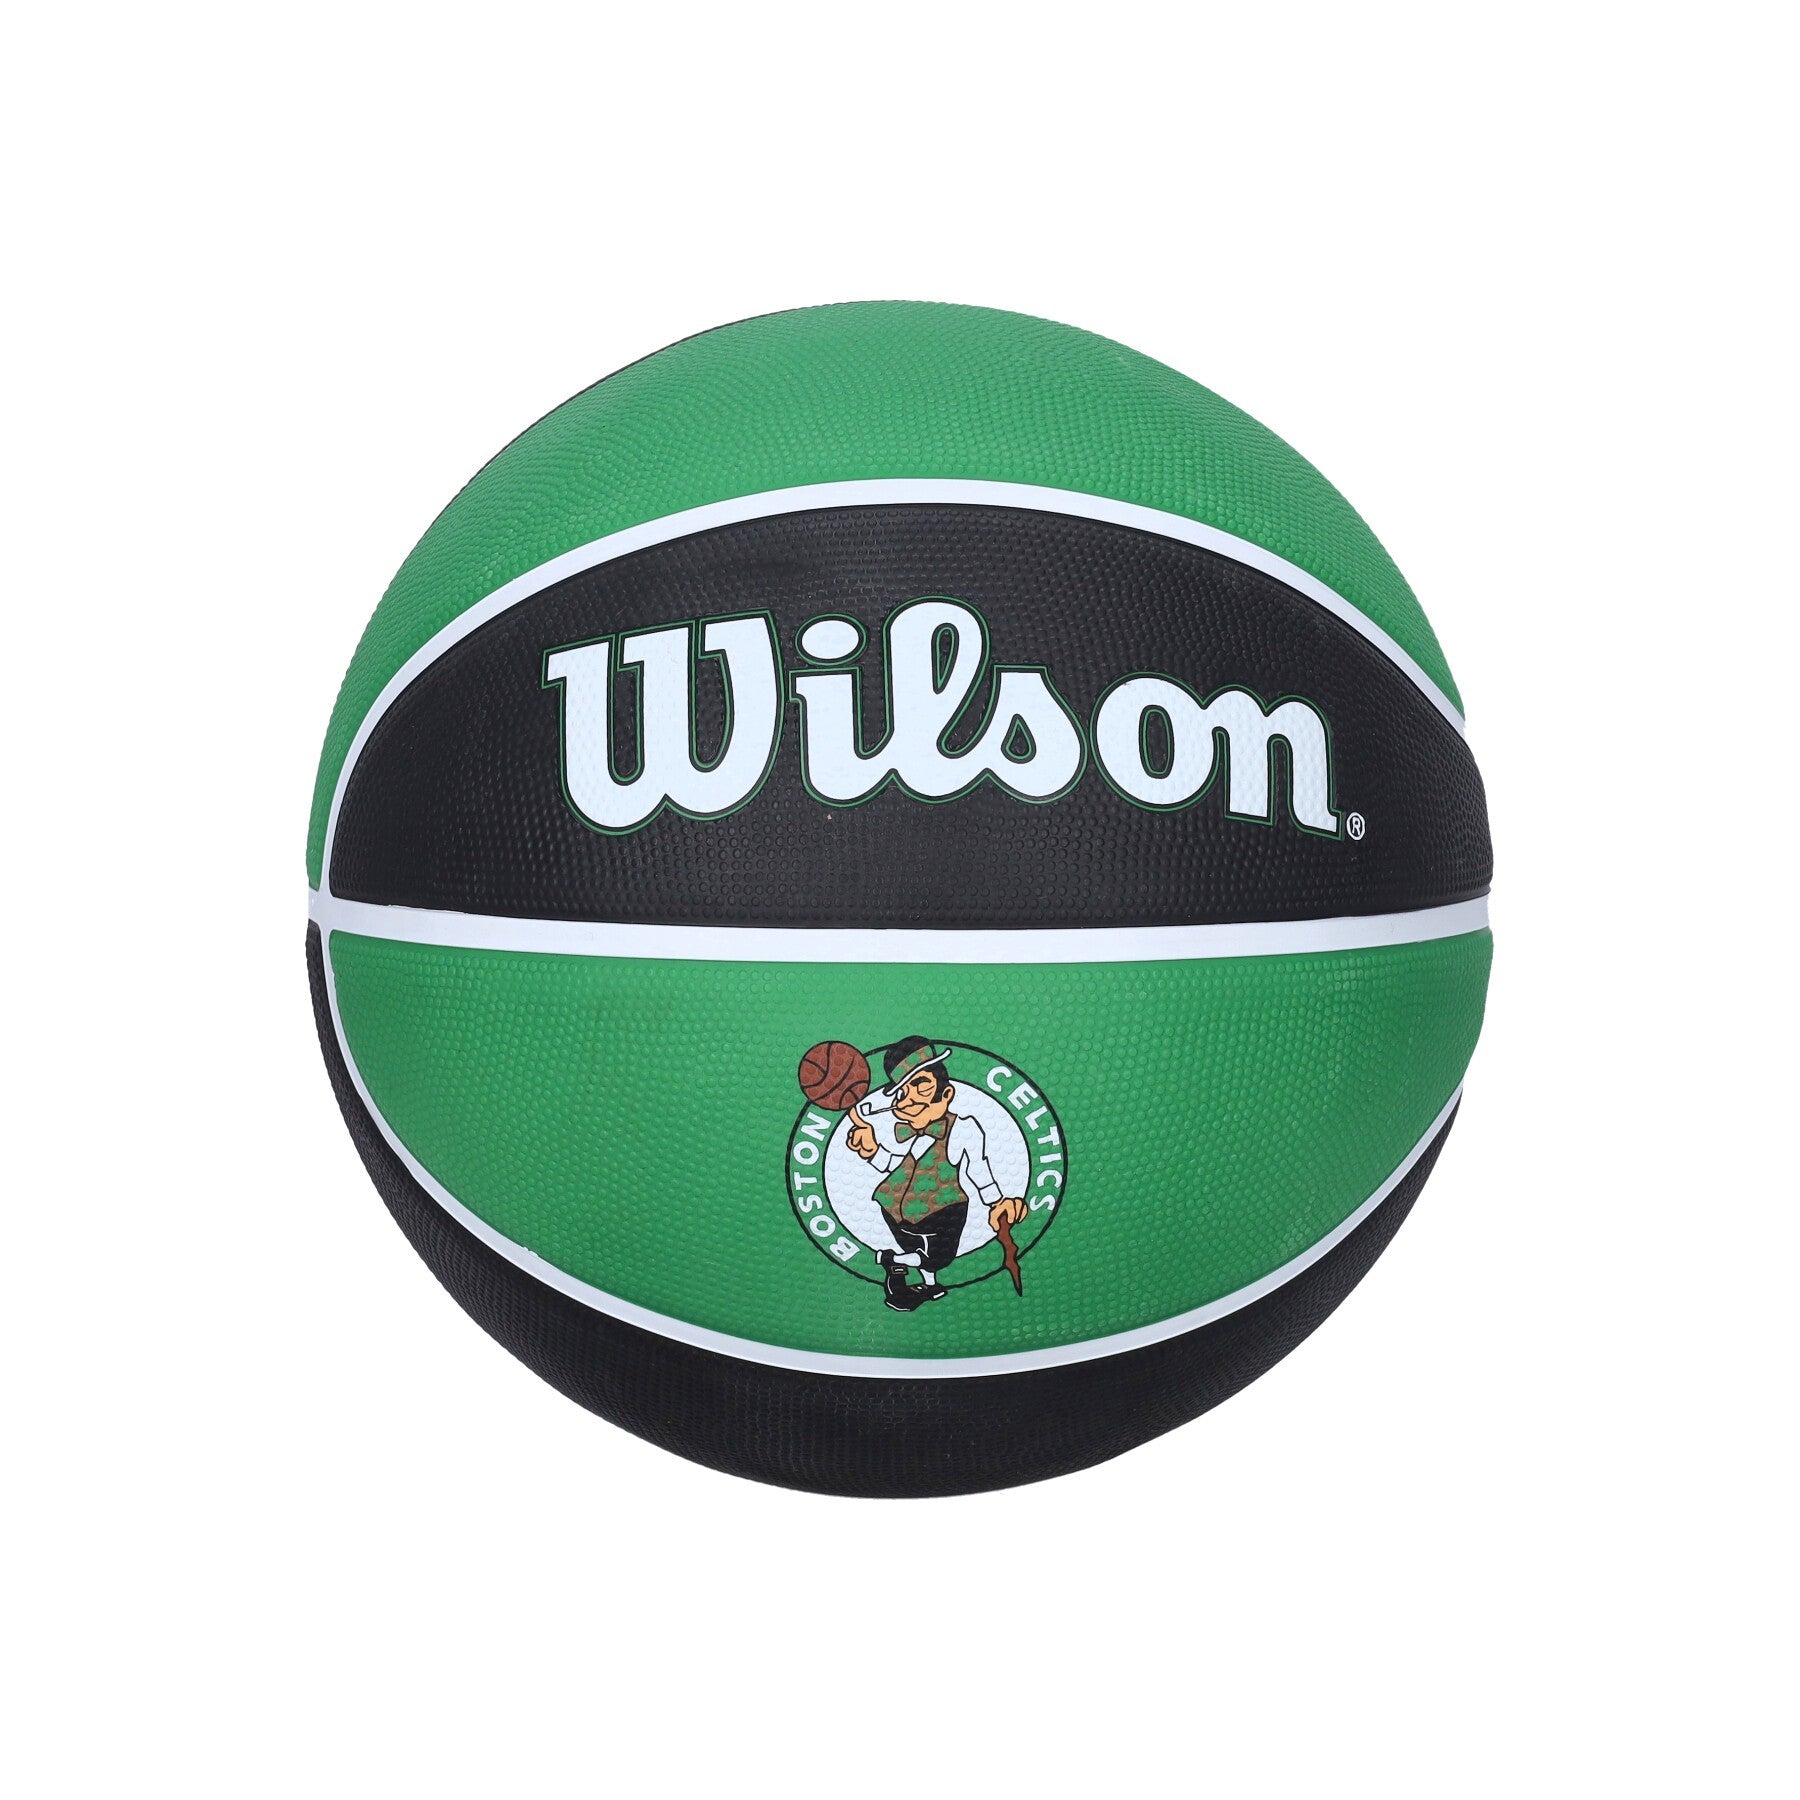 Pallone Uomo Nba Team Tribute Basketball Size 7 Boscel Original Team Colors